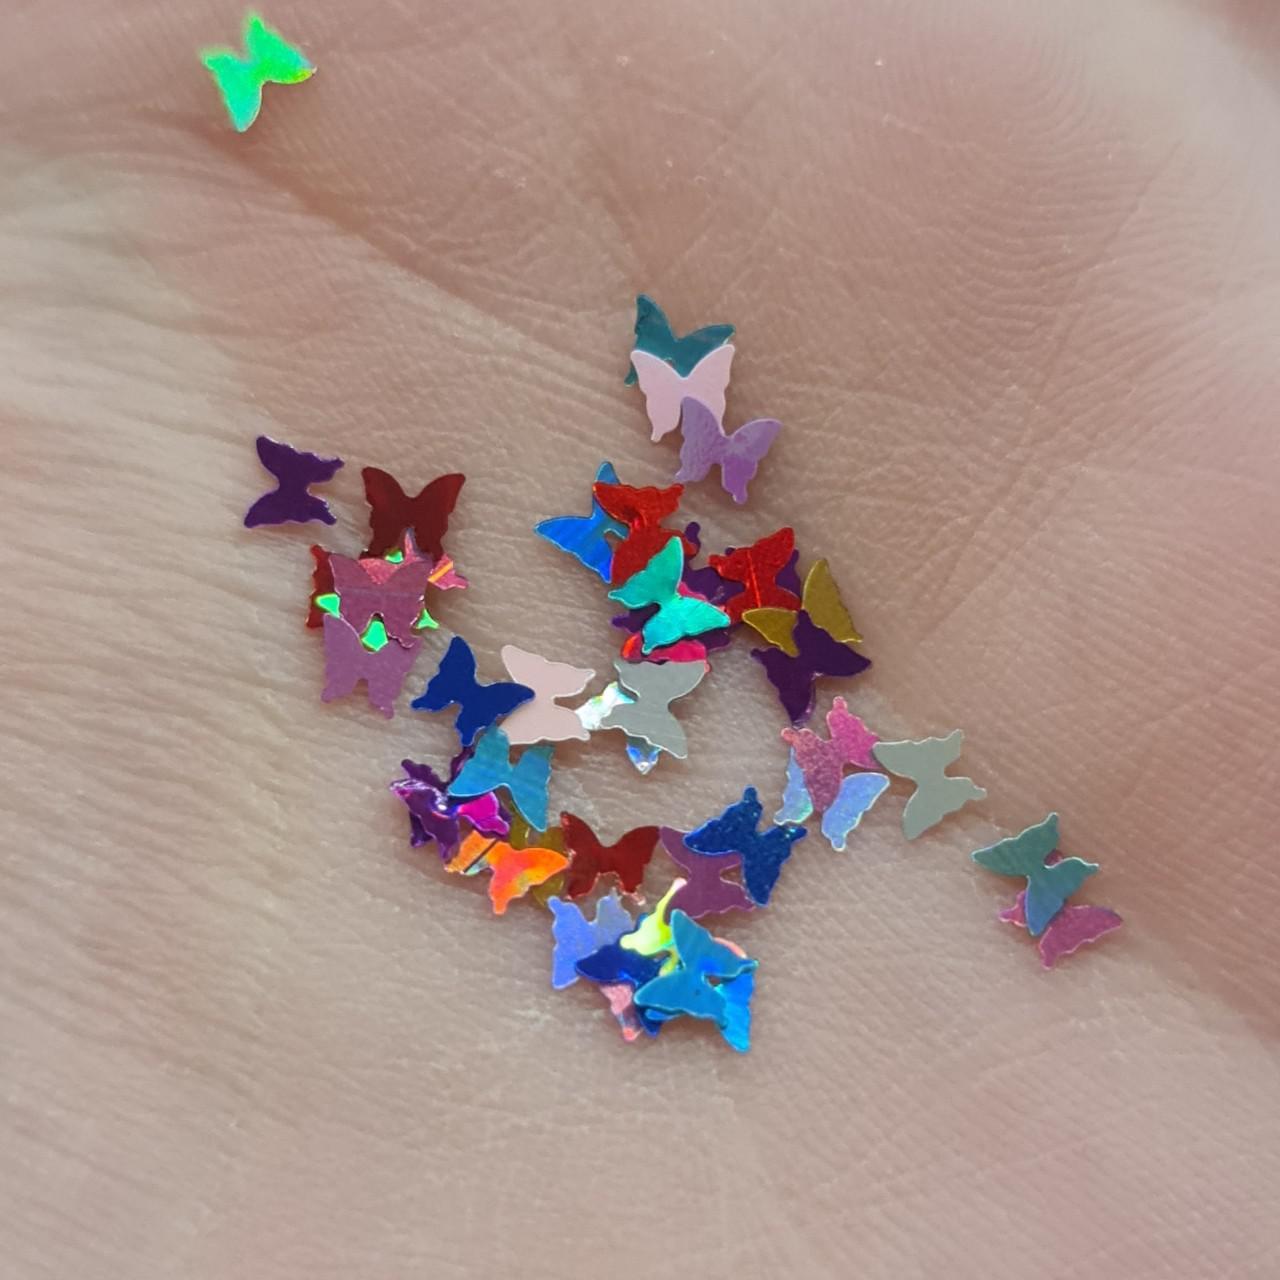 Product Image 3 - Loose glitter multicolour butterflys pot.
Suitable